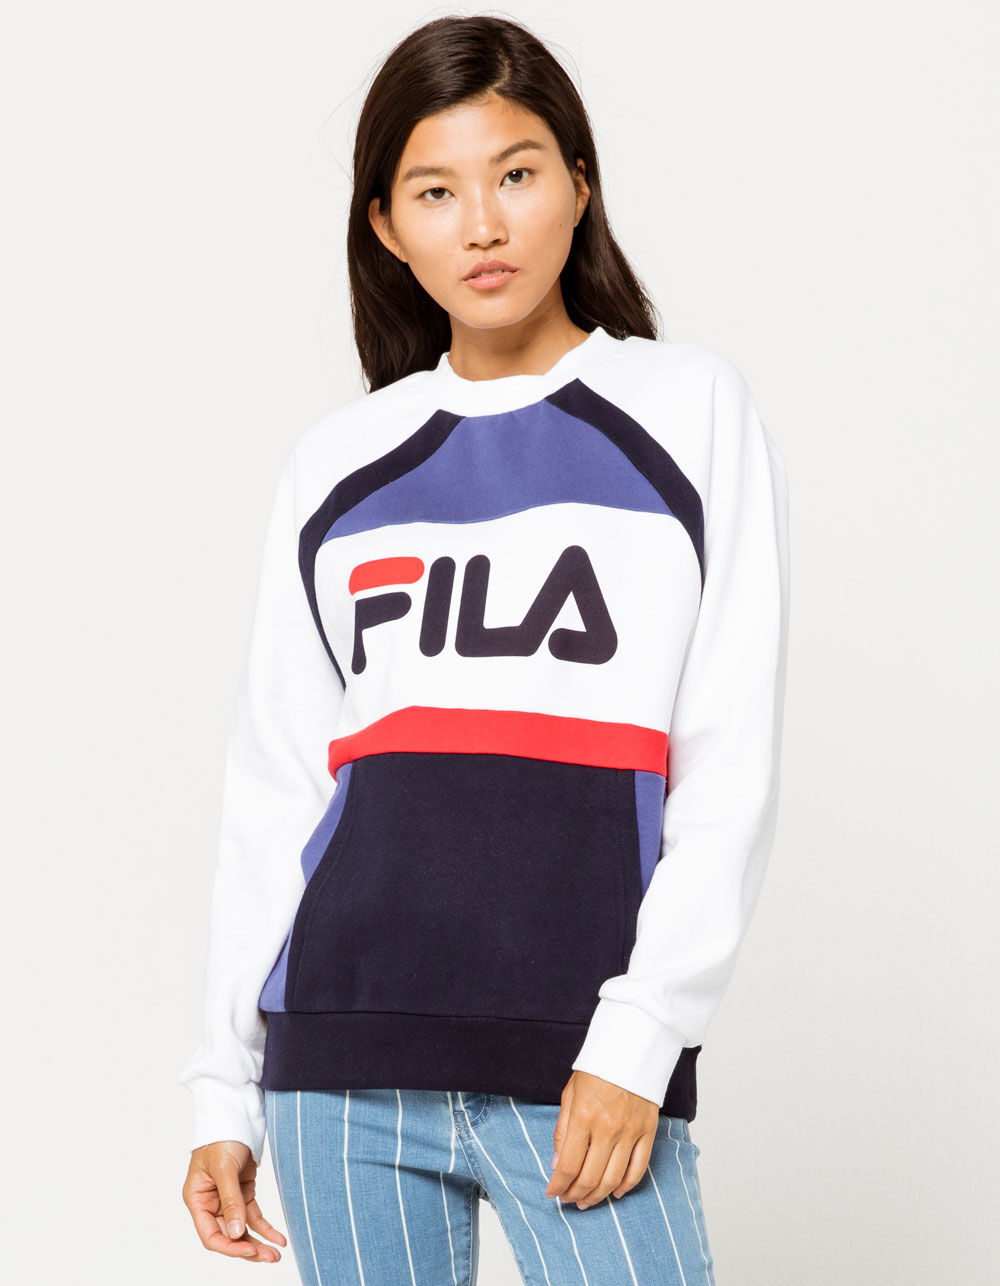 FILA Emi Womens Sweatshirt - WHITE COMBO | Tillys